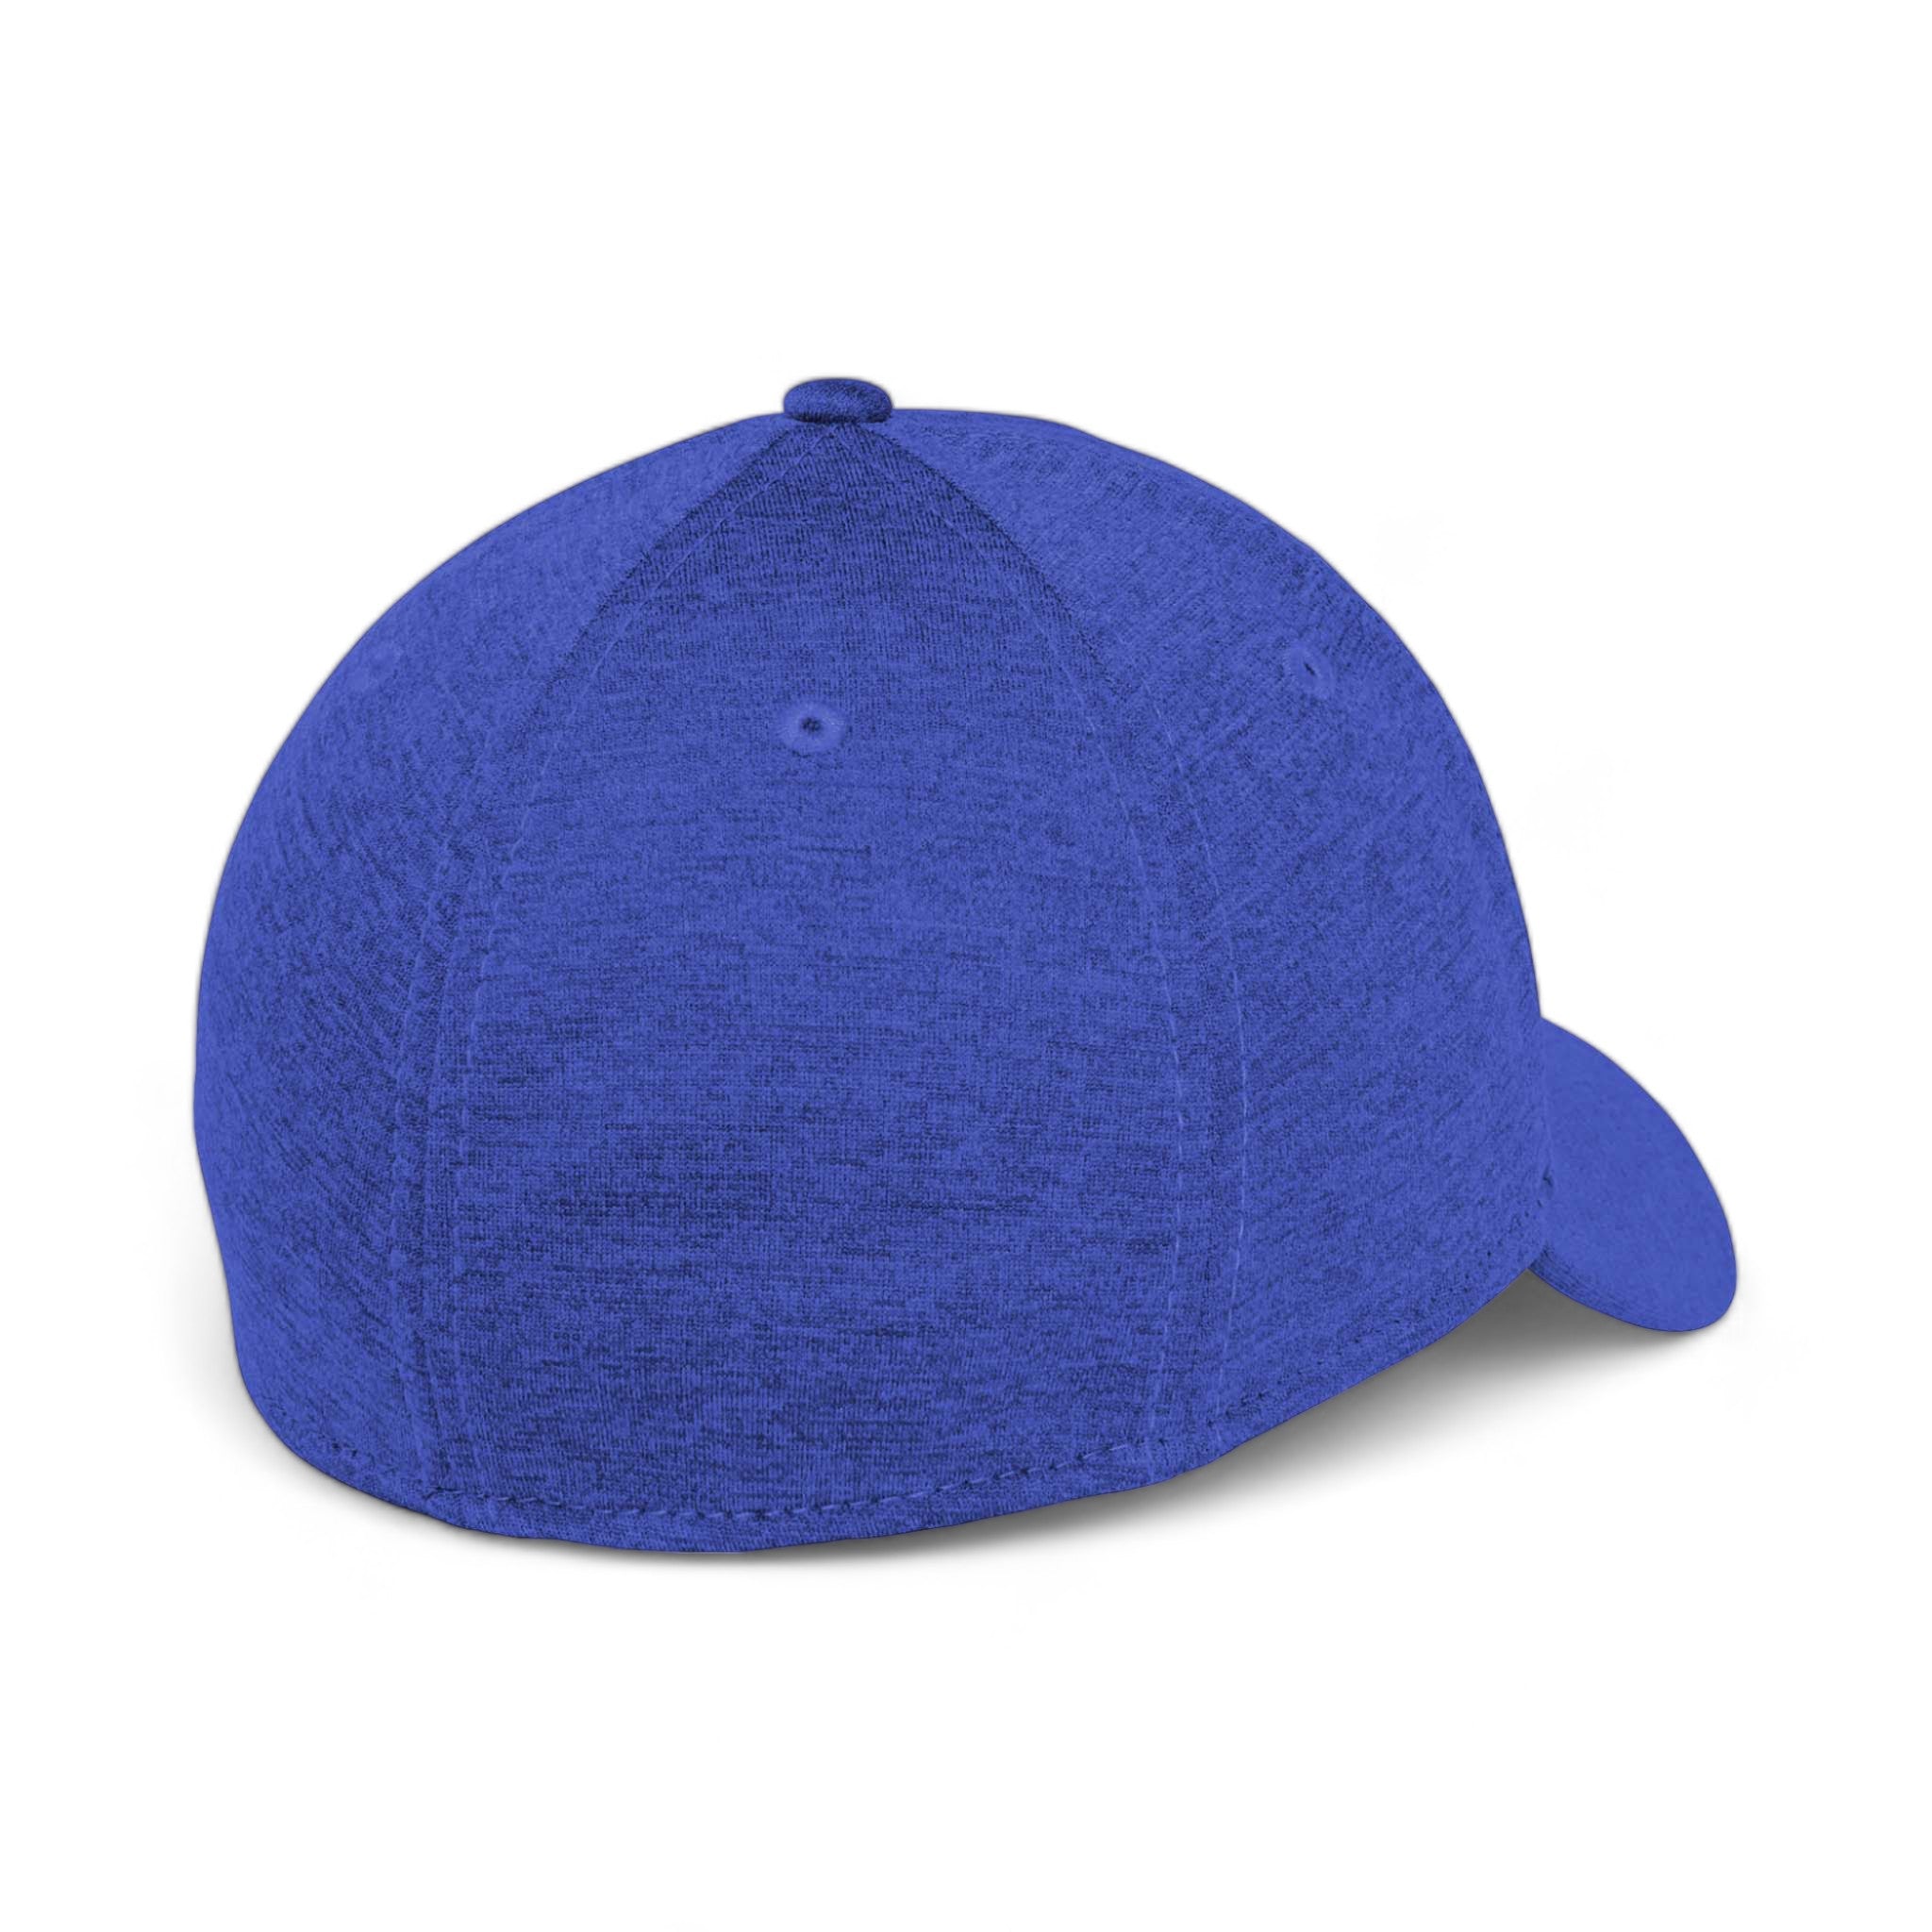 Back view of New Era NE703 custom hat in royal shadow heather